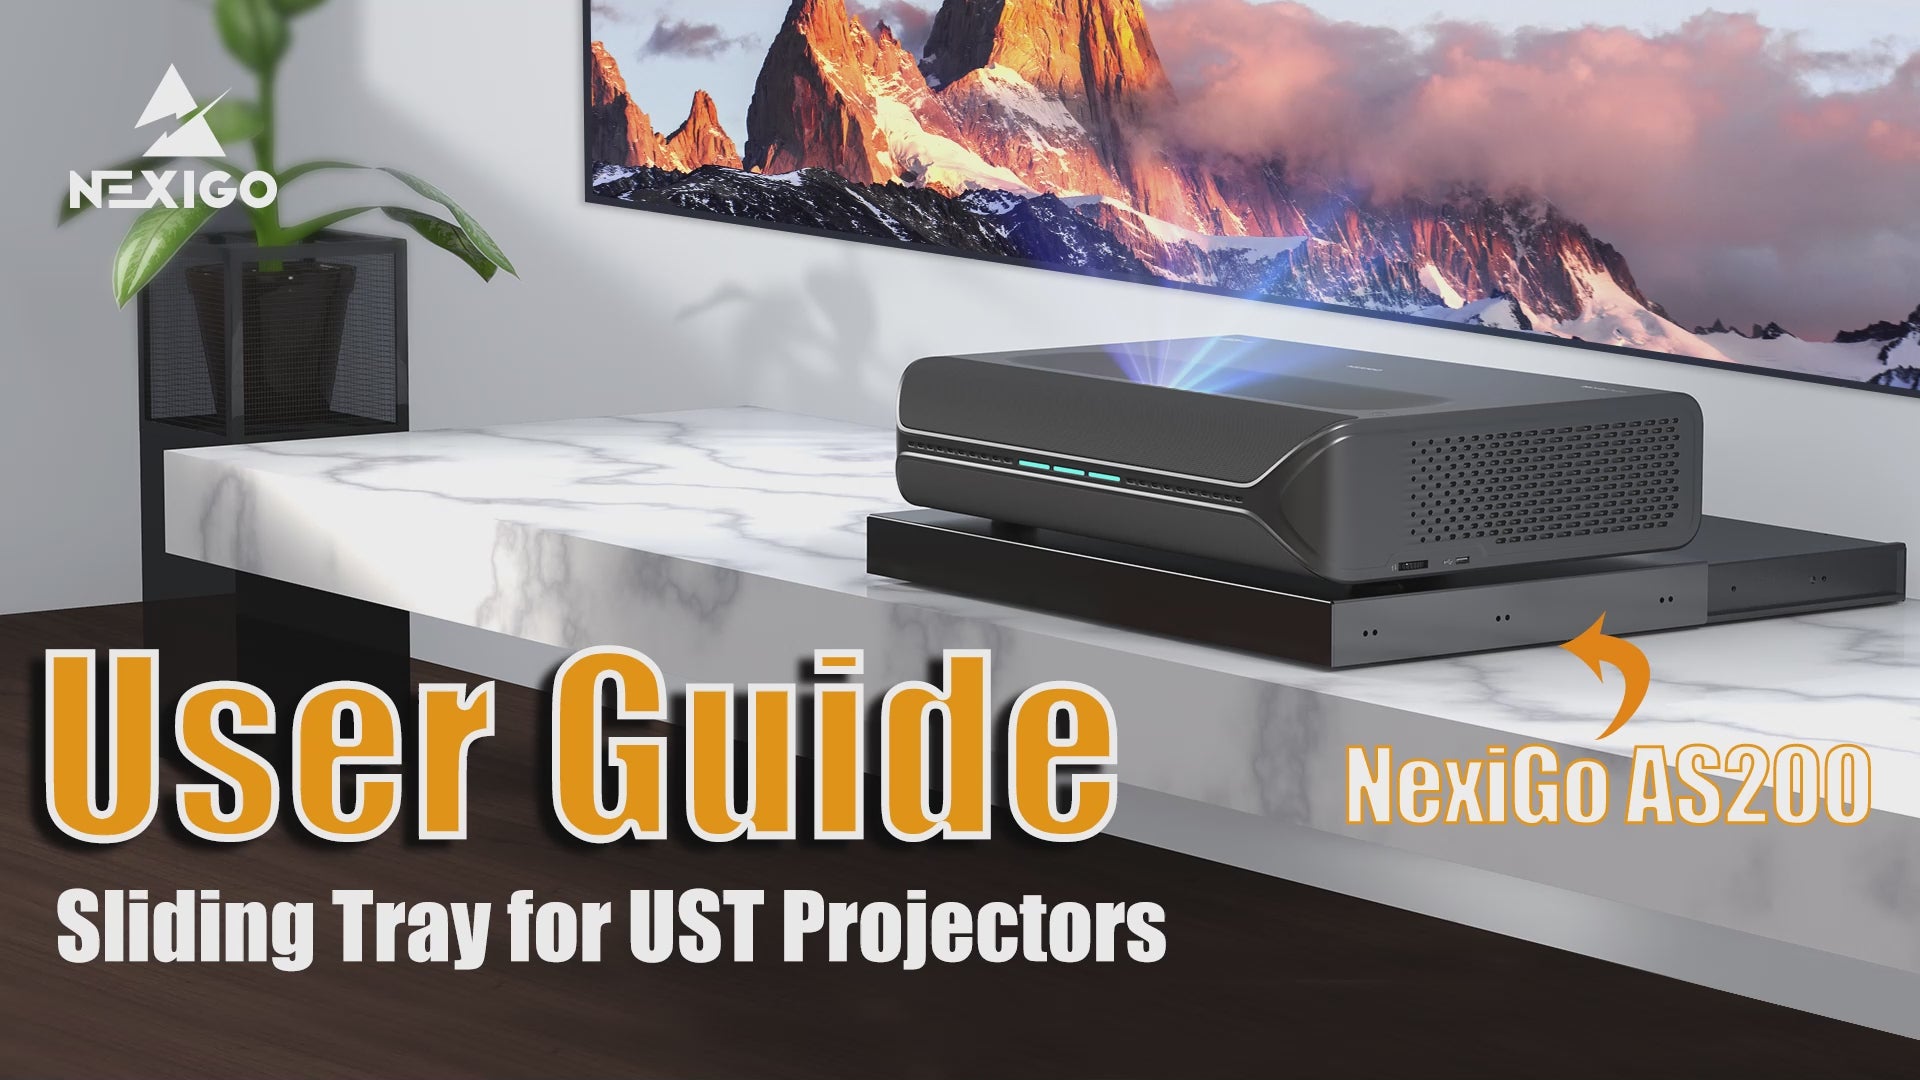 NexiGo Sliding Tray for UST Projectors